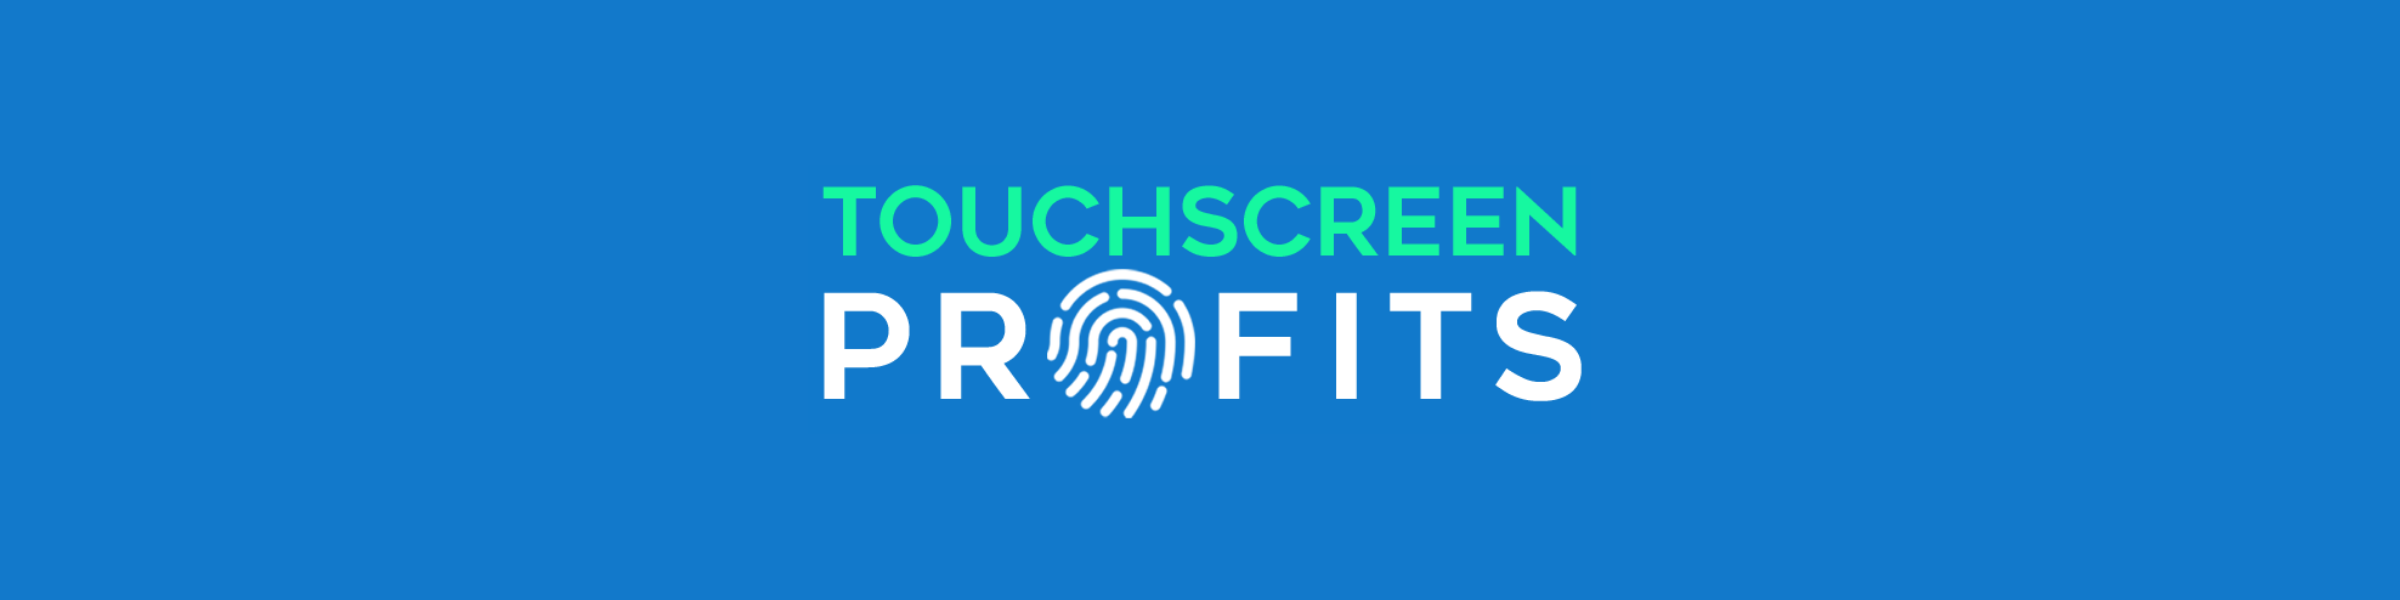 Touchscreen Profits Press Release